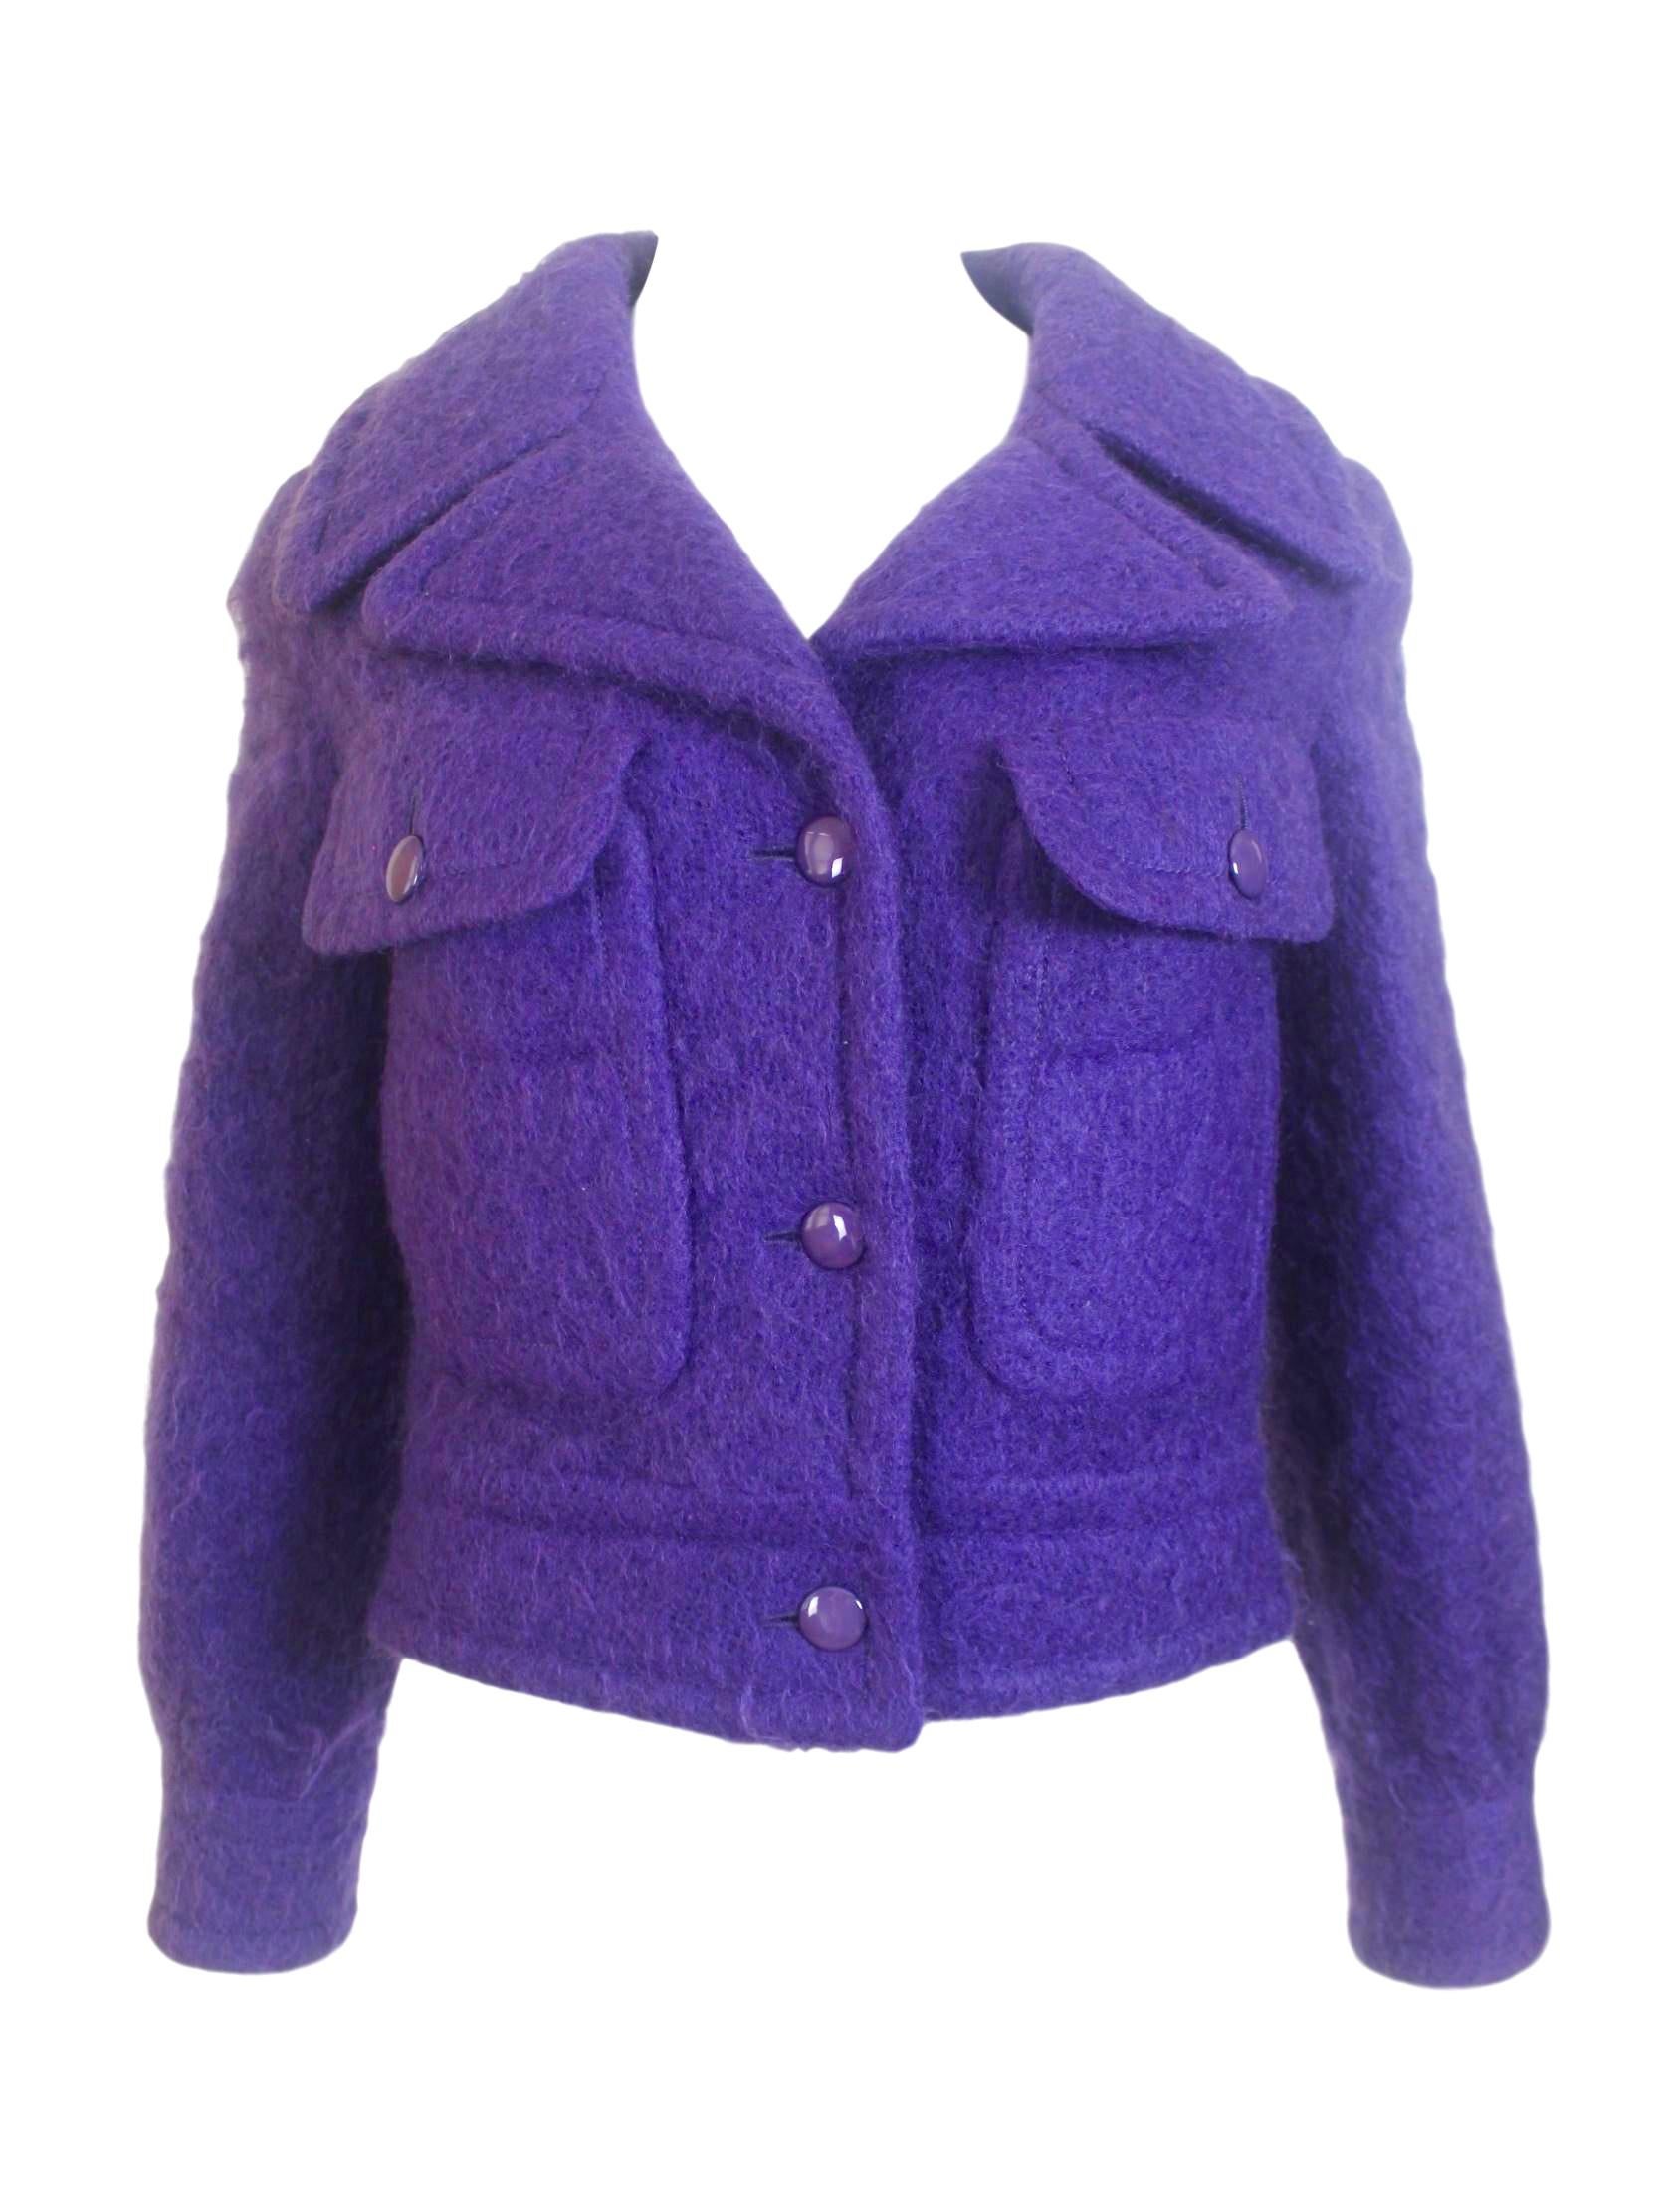 Pierre Cardin 1960s Mohair Jacket For Sale 2